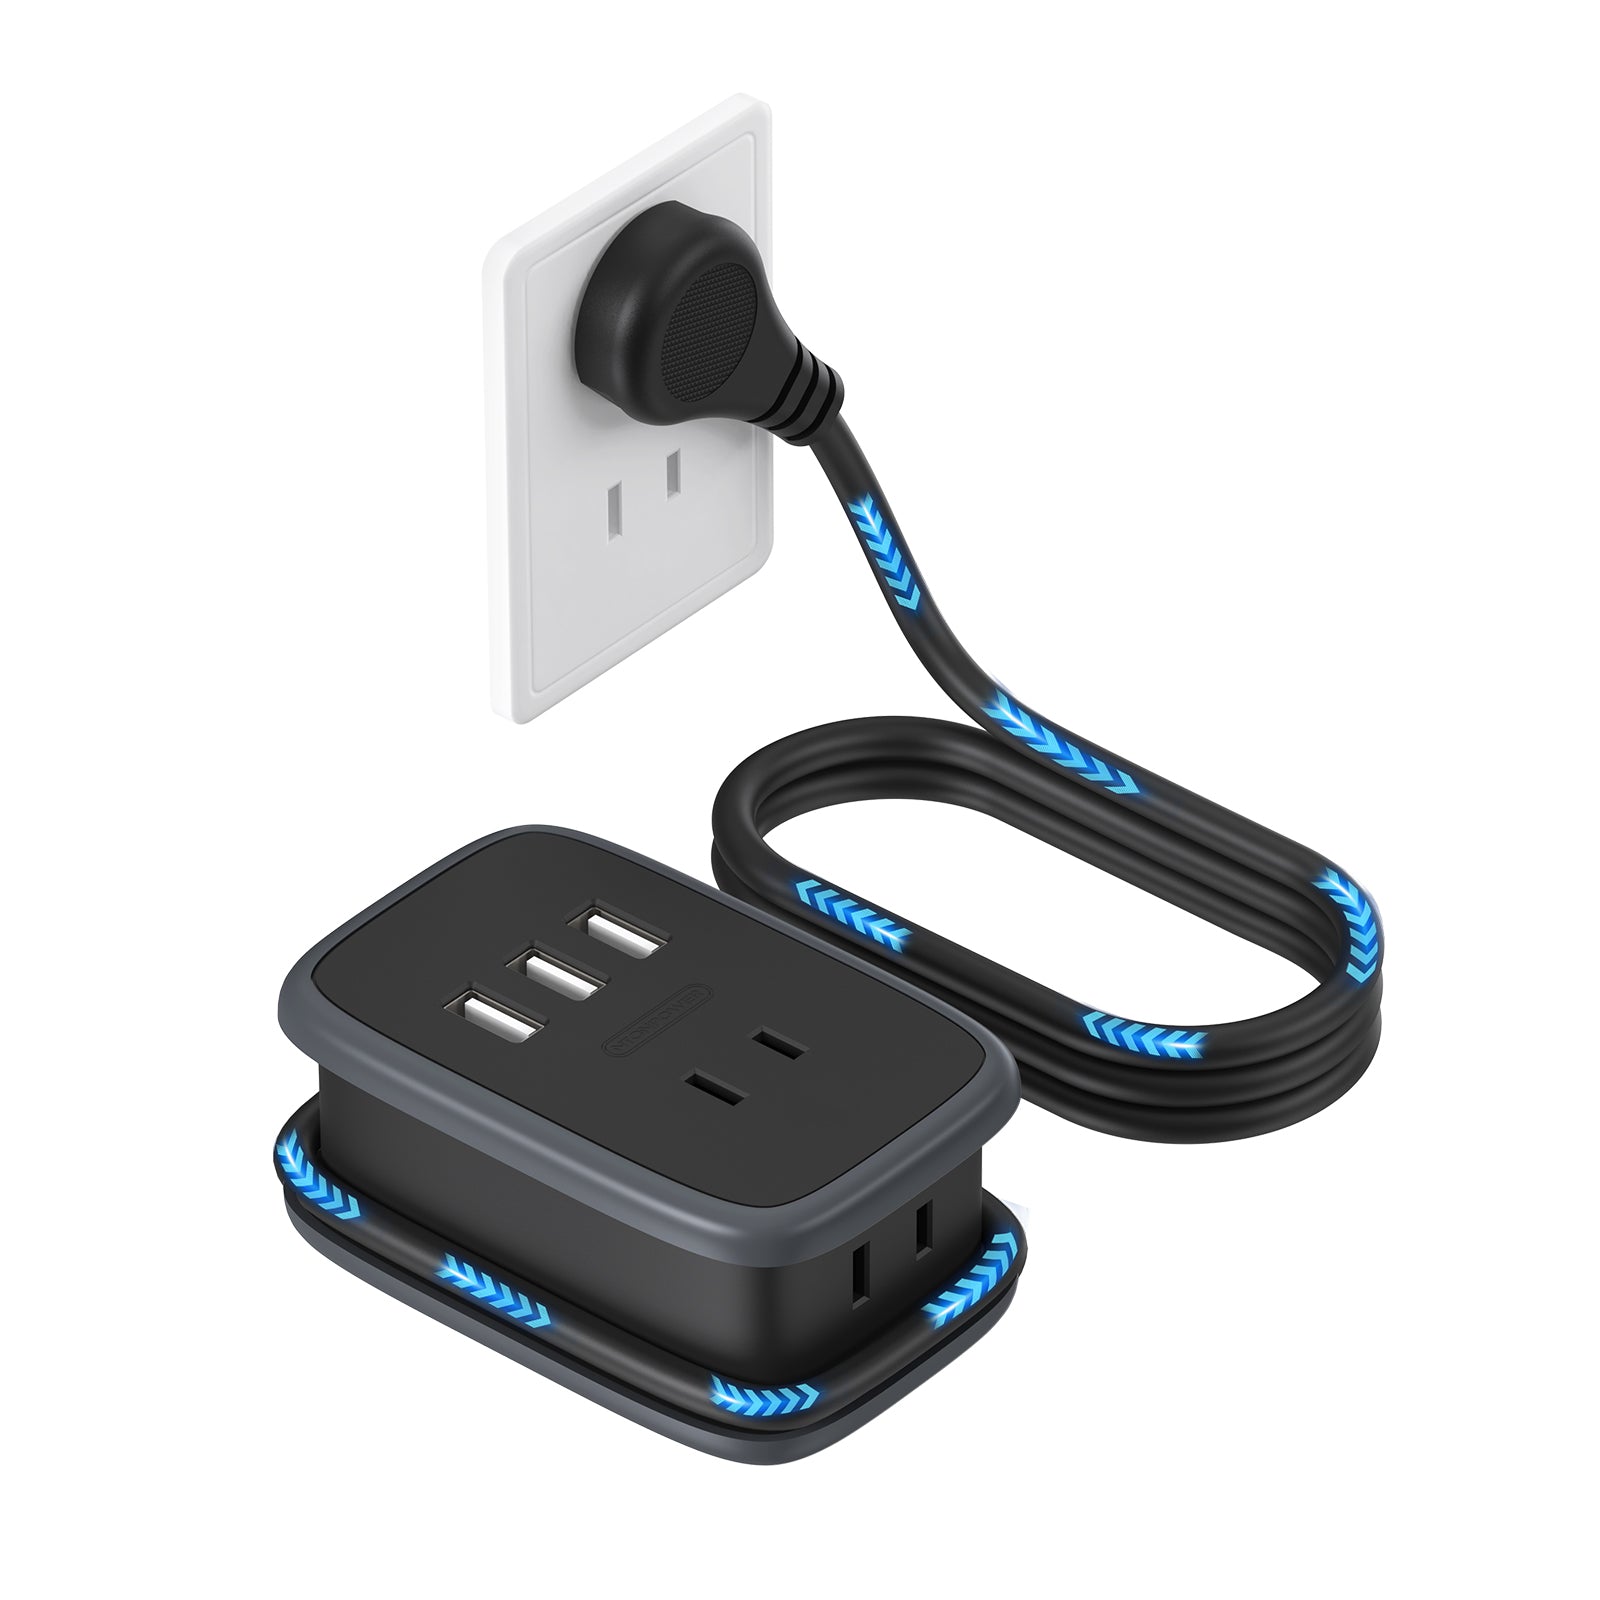 Ntonpower New JP Travel Pocket Power Strip 2 Outlets 3 USB